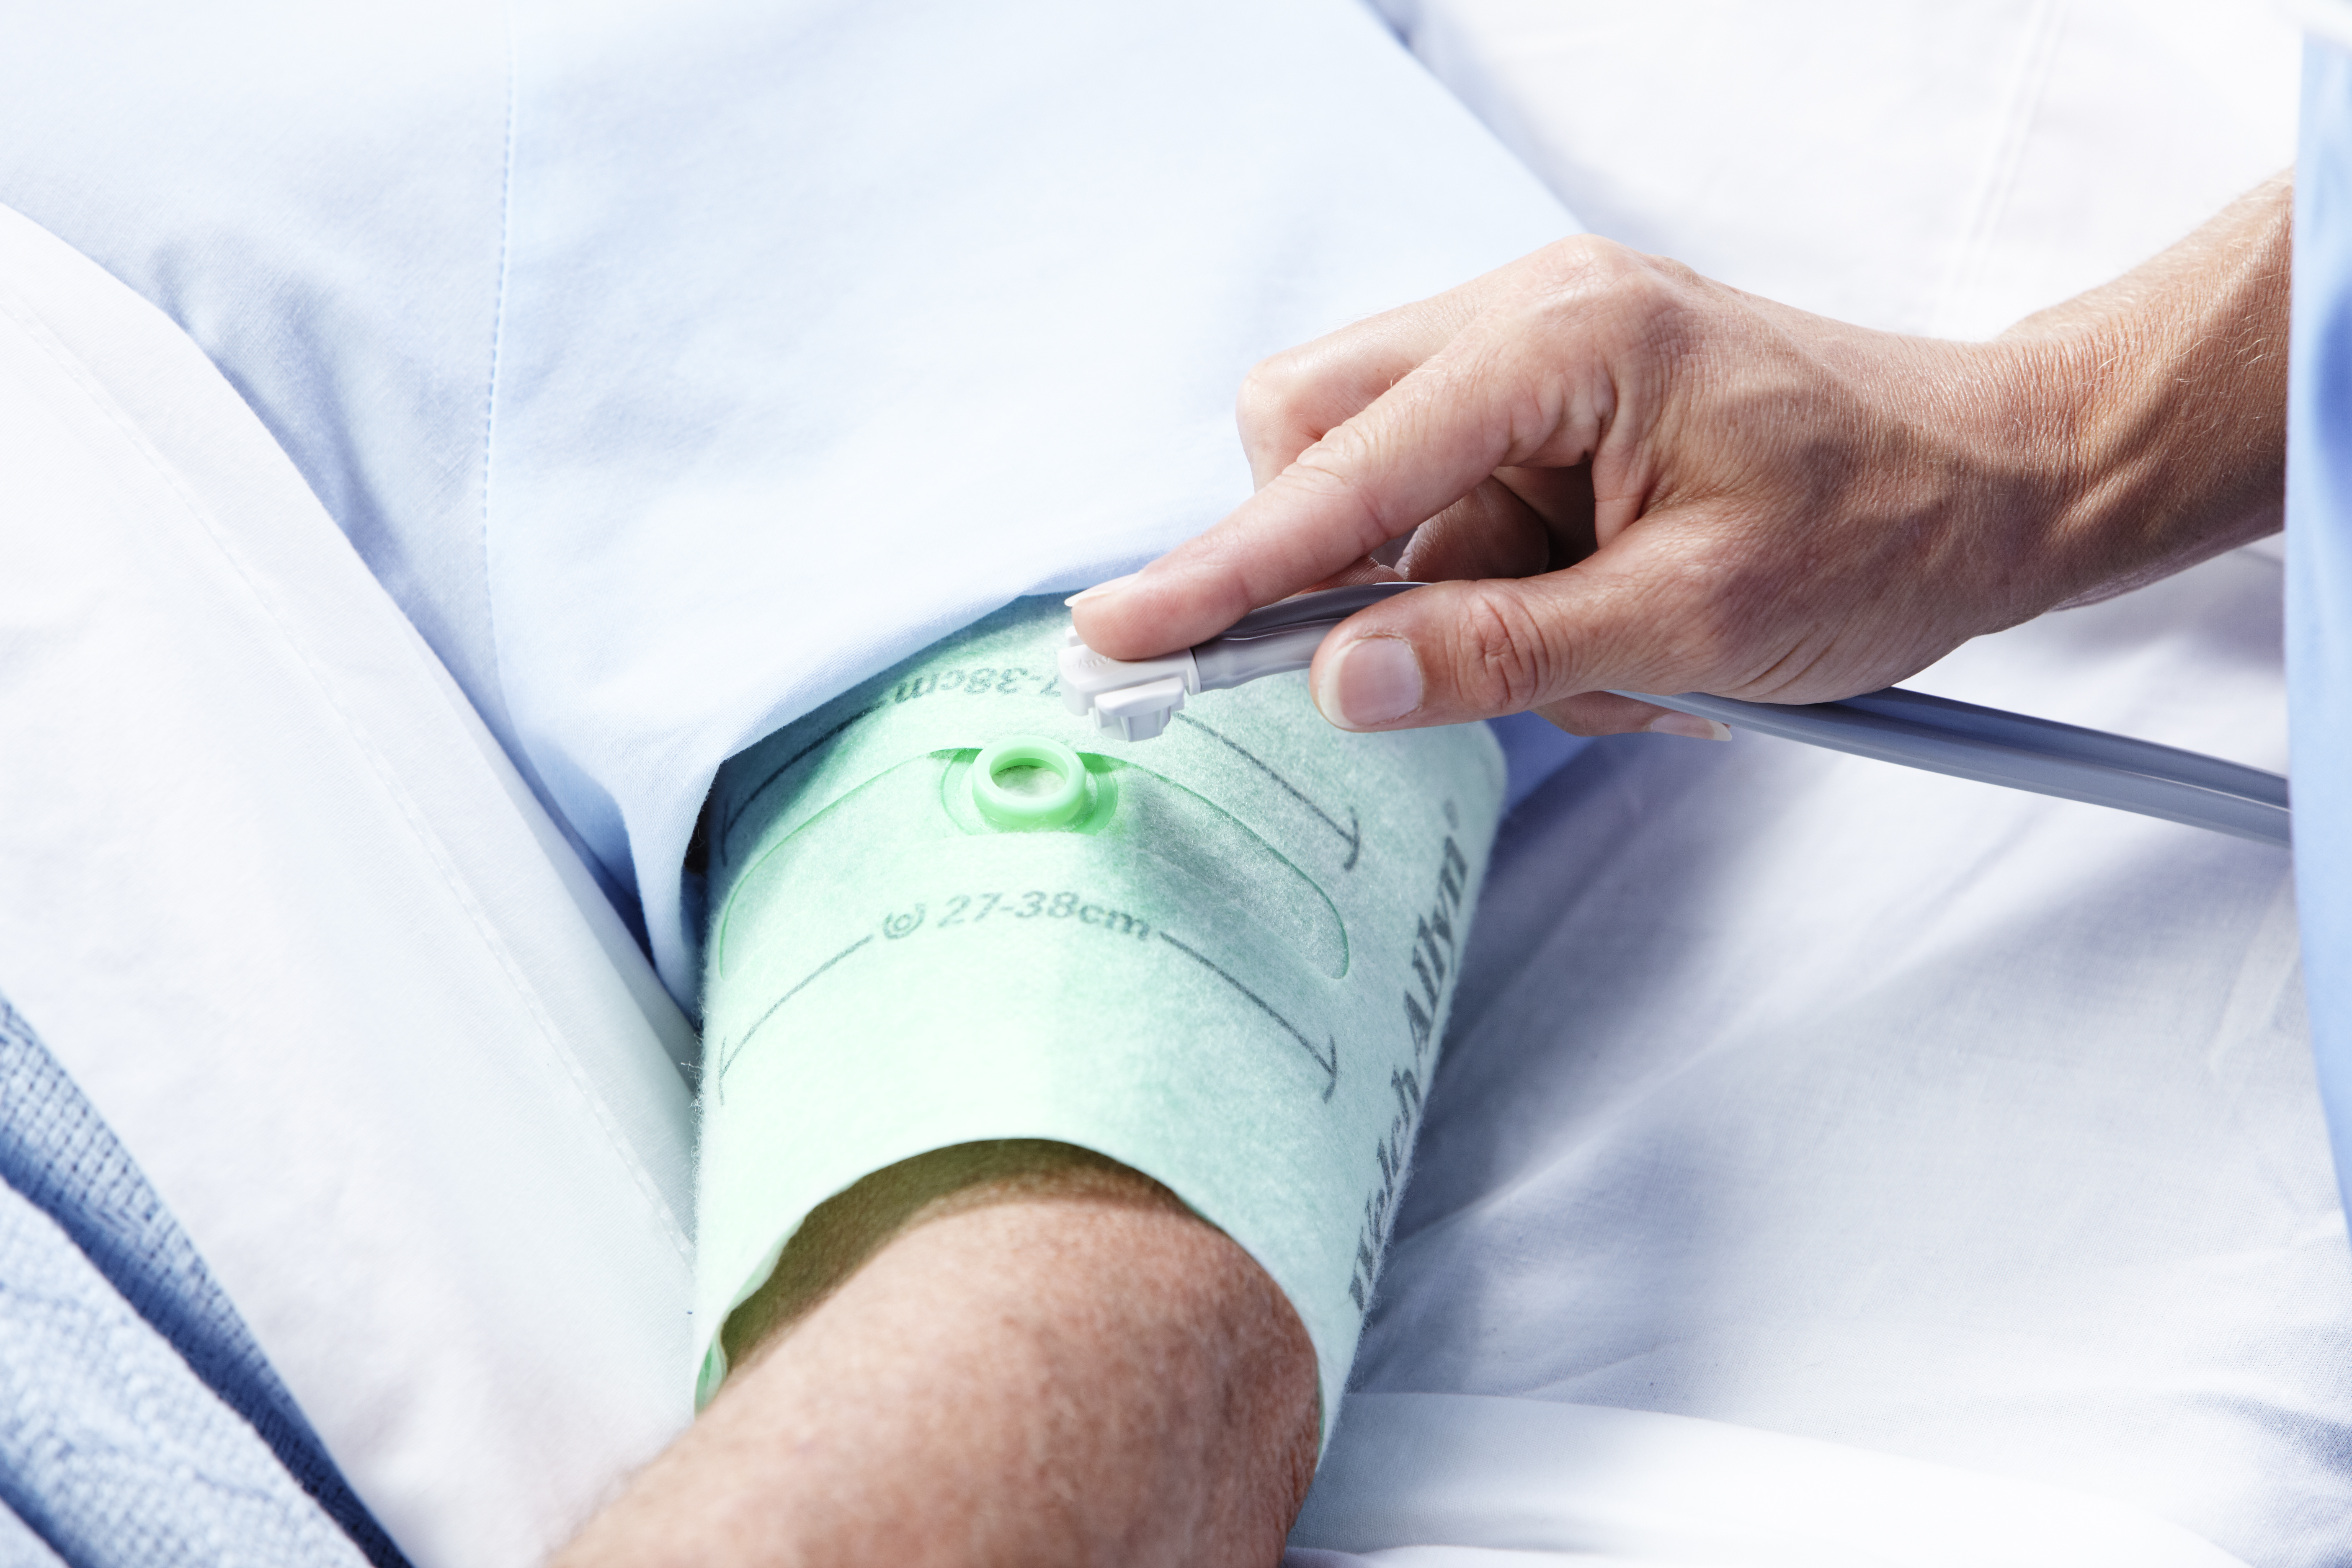 The Different Types of Blood Pressure Cuffs on the Market - Blog @ SunTech  - SunTech Medical